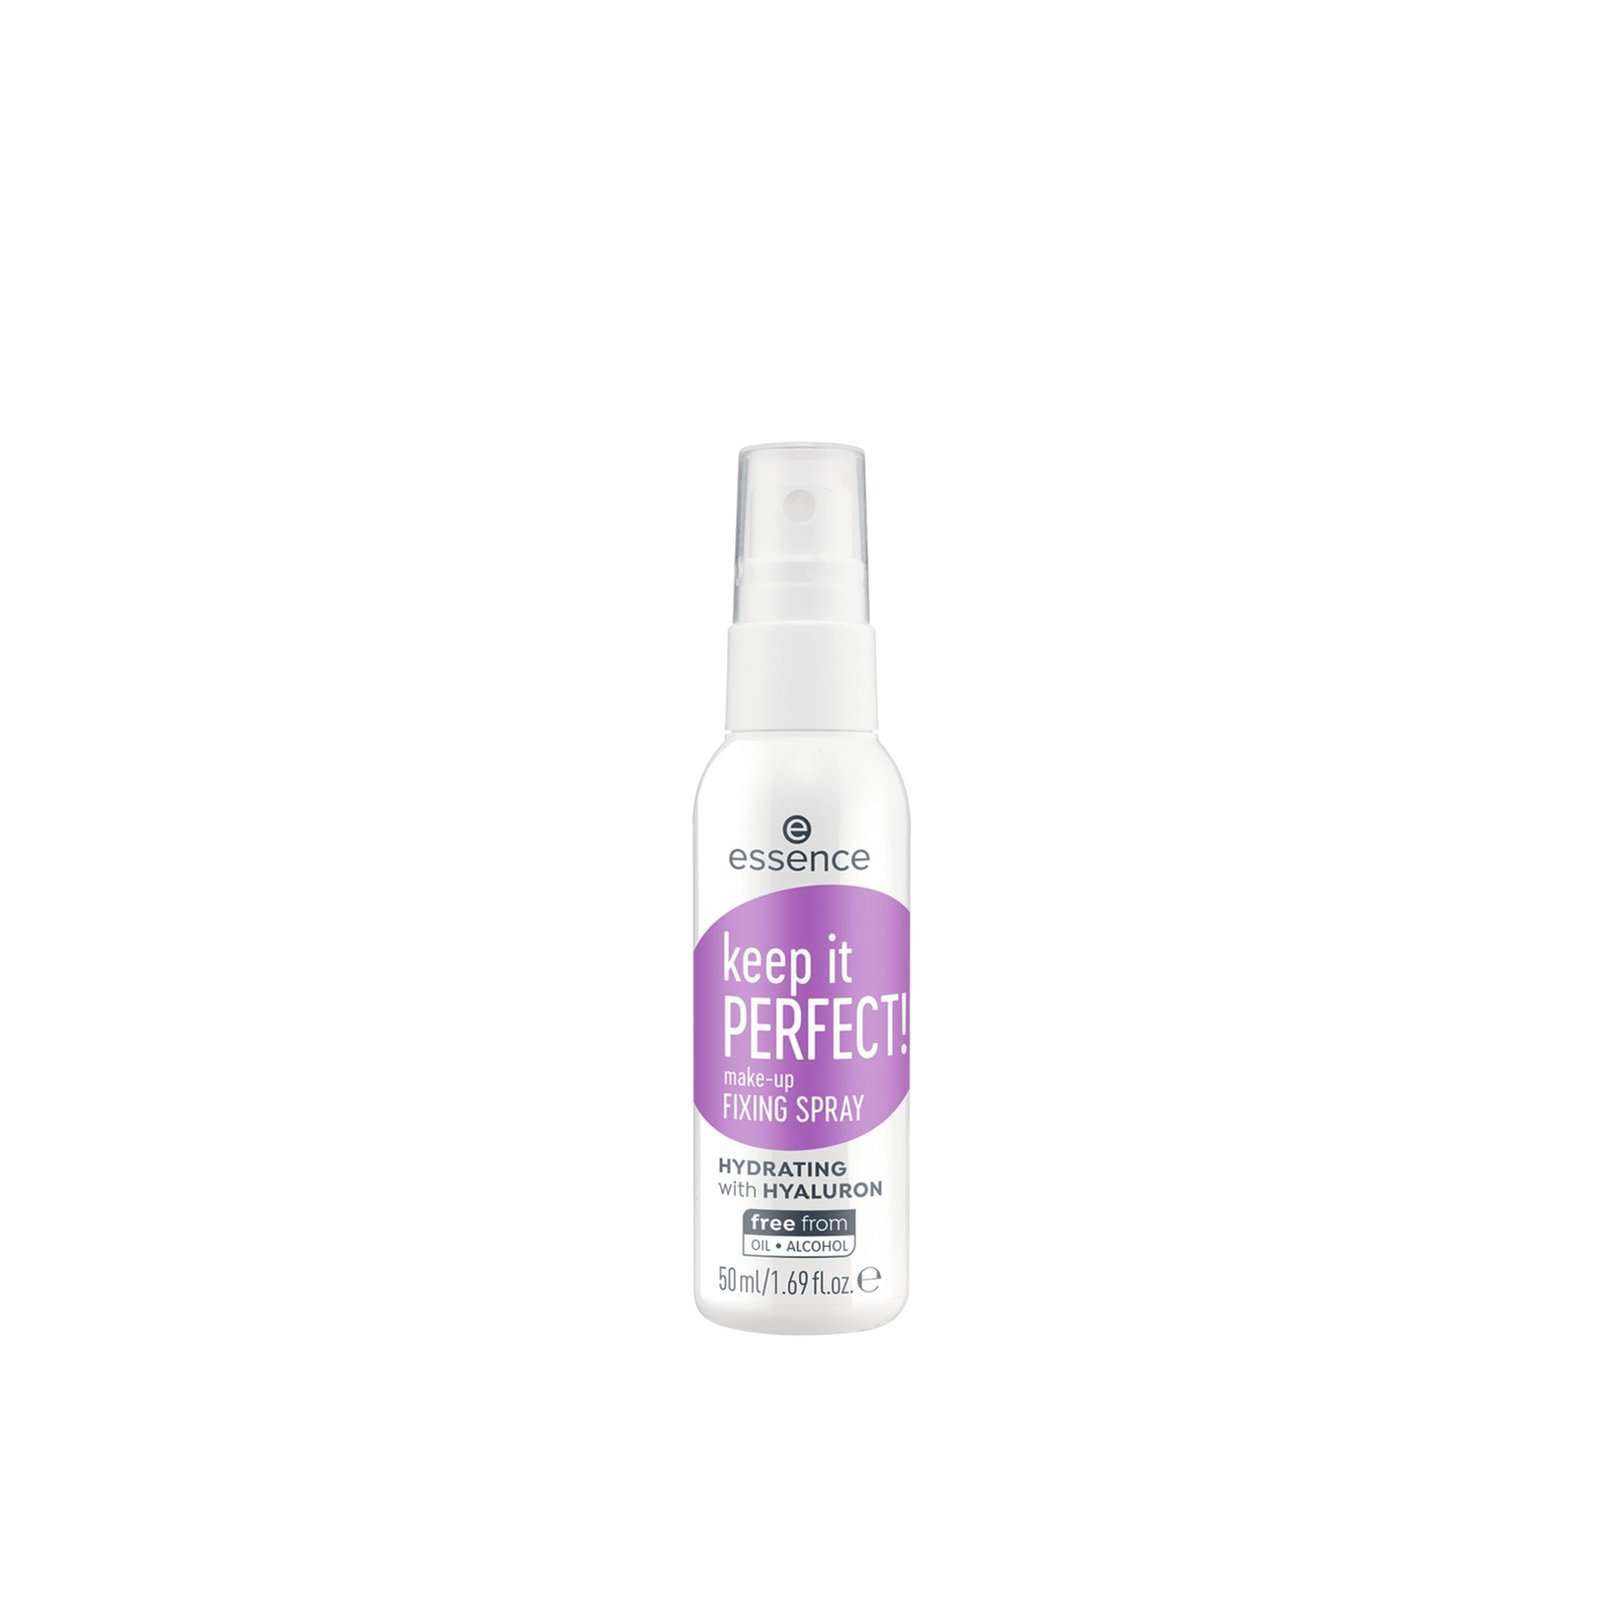 essence Keep It Perfect! Make-Up Fixing Spray 50ml (1.69 fl oz)